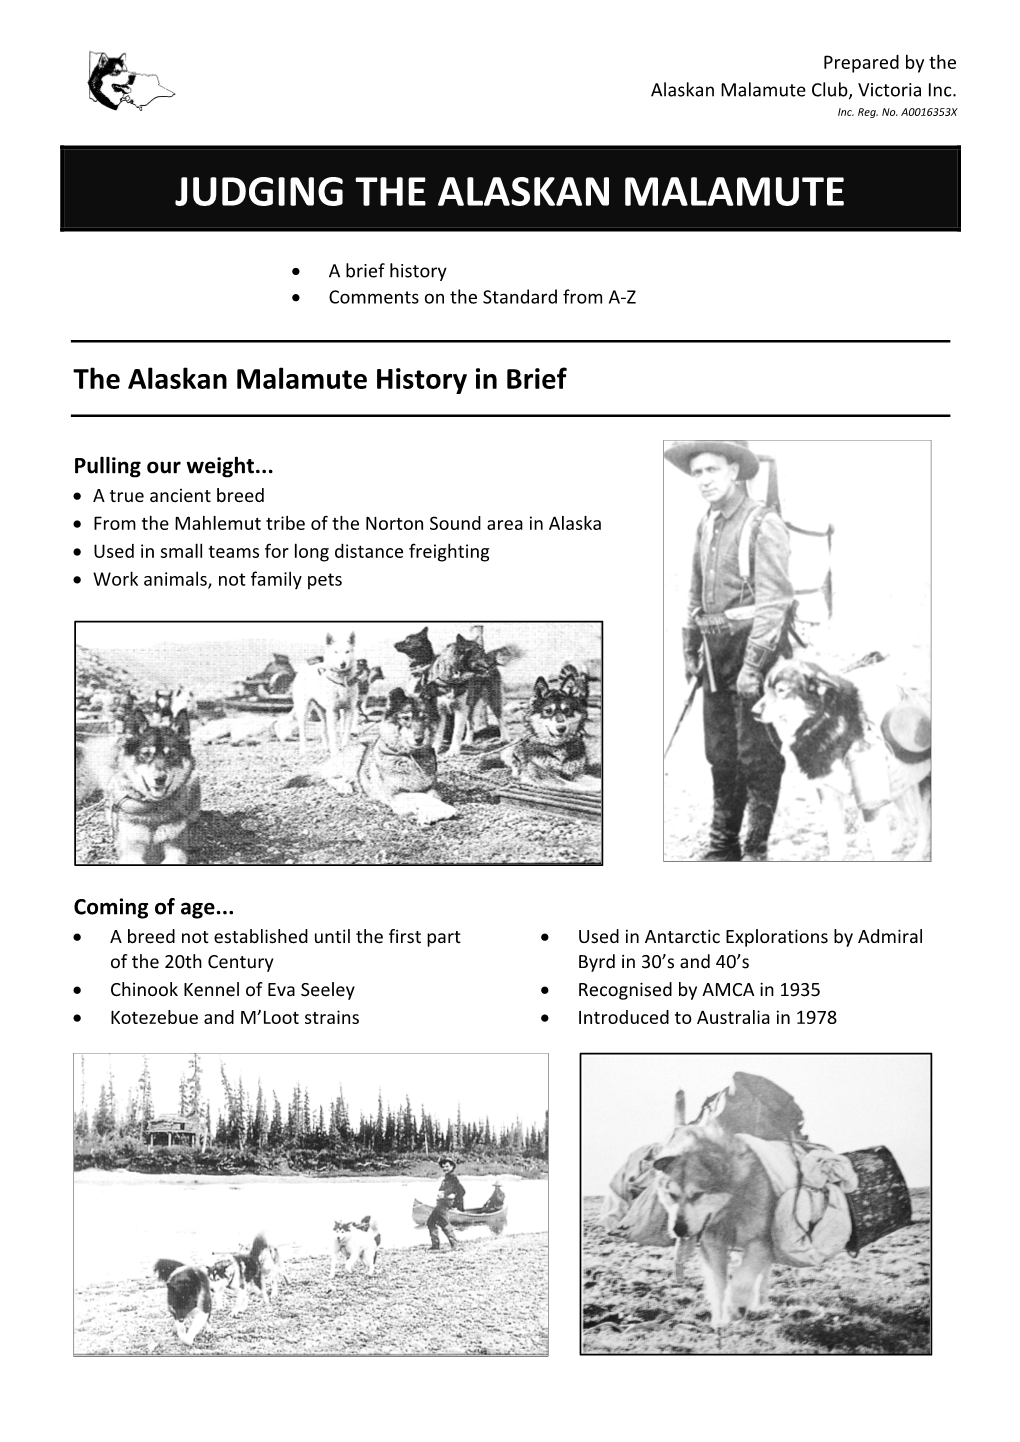 Judging the Alaskan Malamute